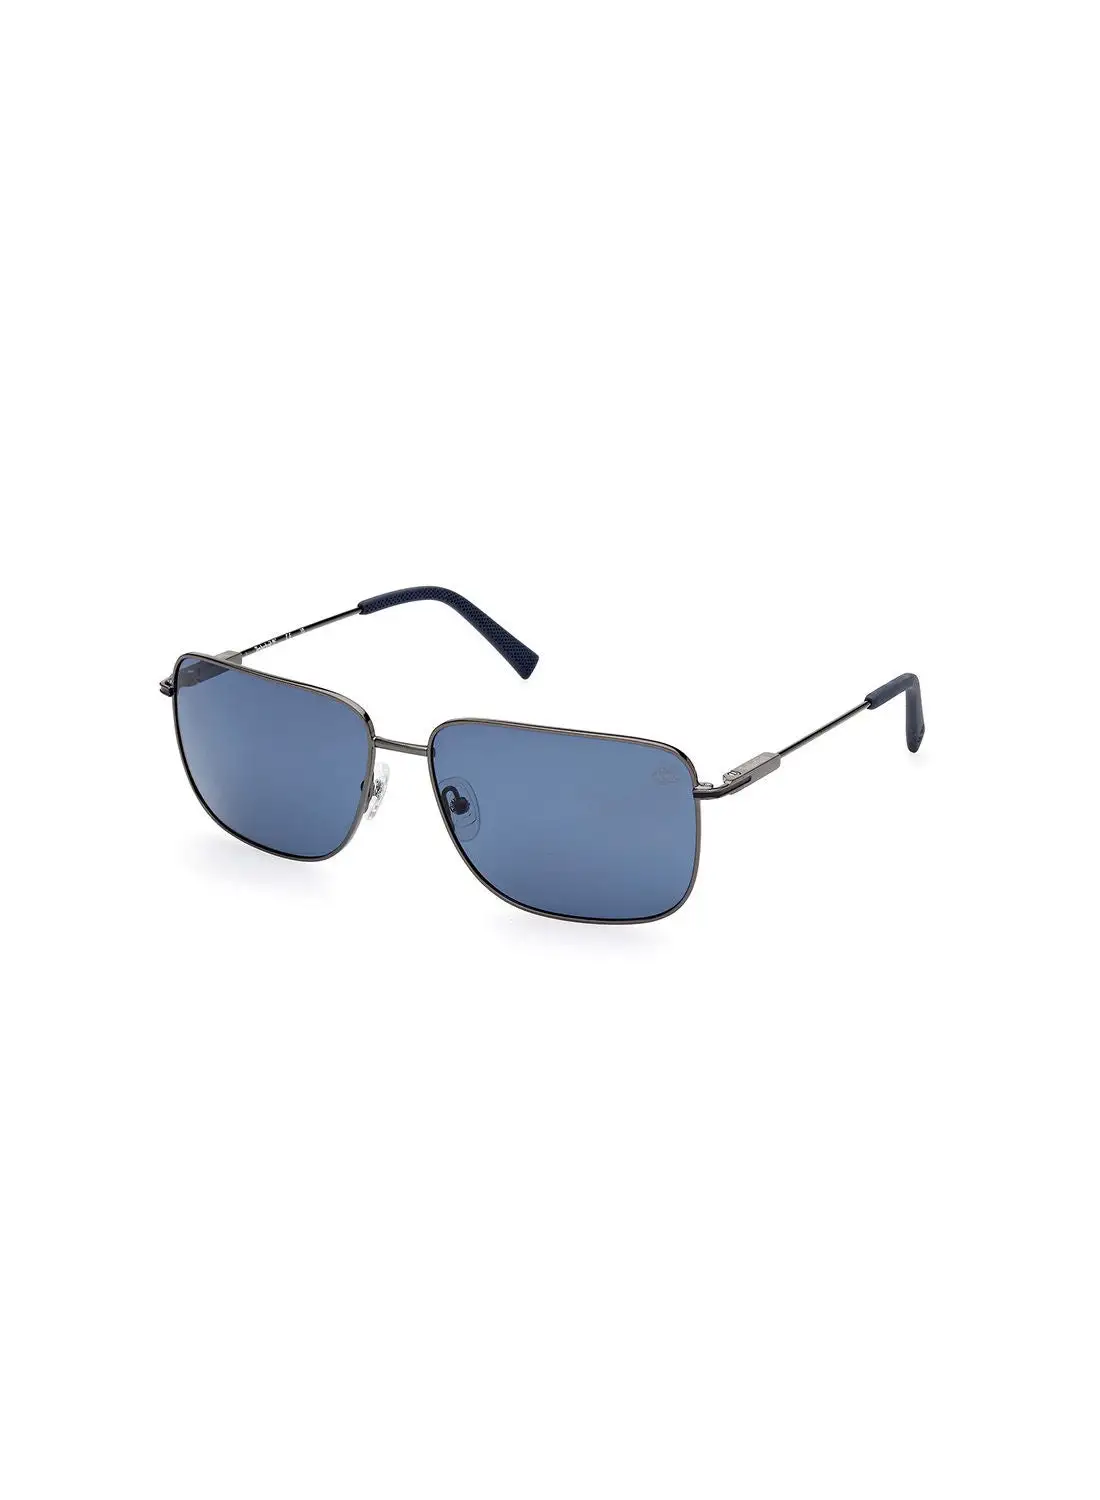 Timberland Men's Polarized Rectangular Sunglasses - TB929006D62 - Lens Size: 62 Mm